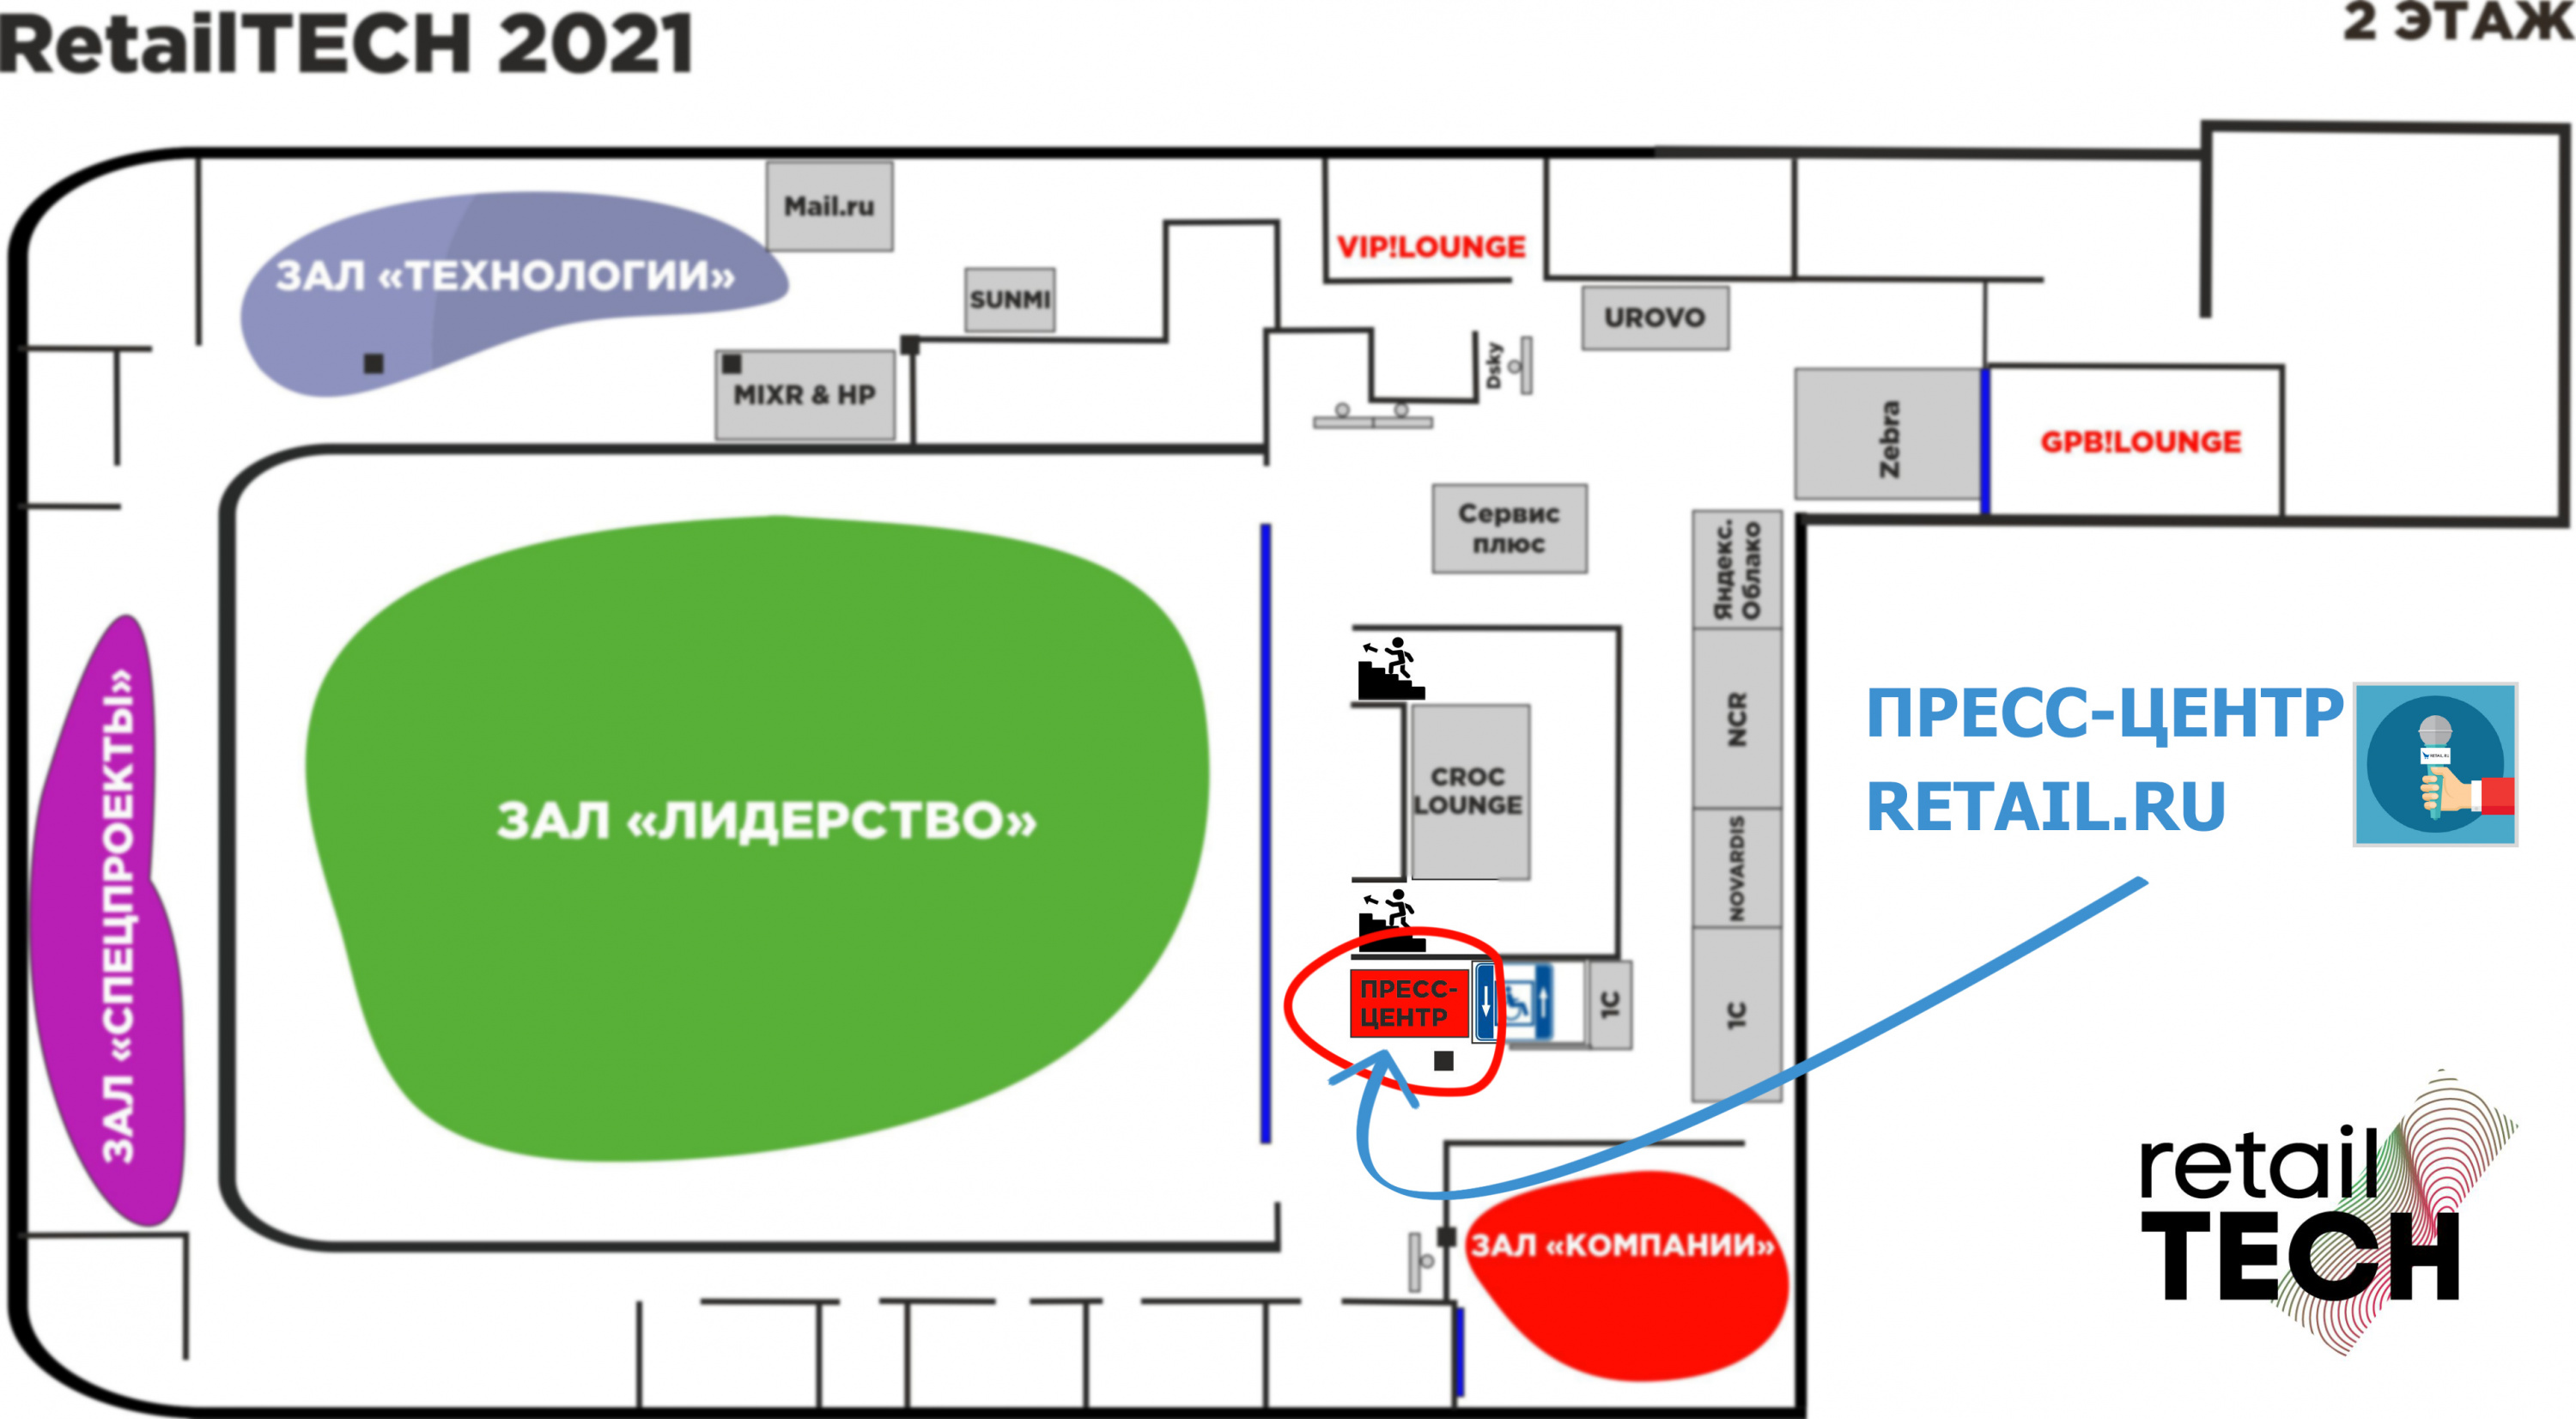 Пресс-центр RetailTECH 2021 2 этаж ЦДП.jpg